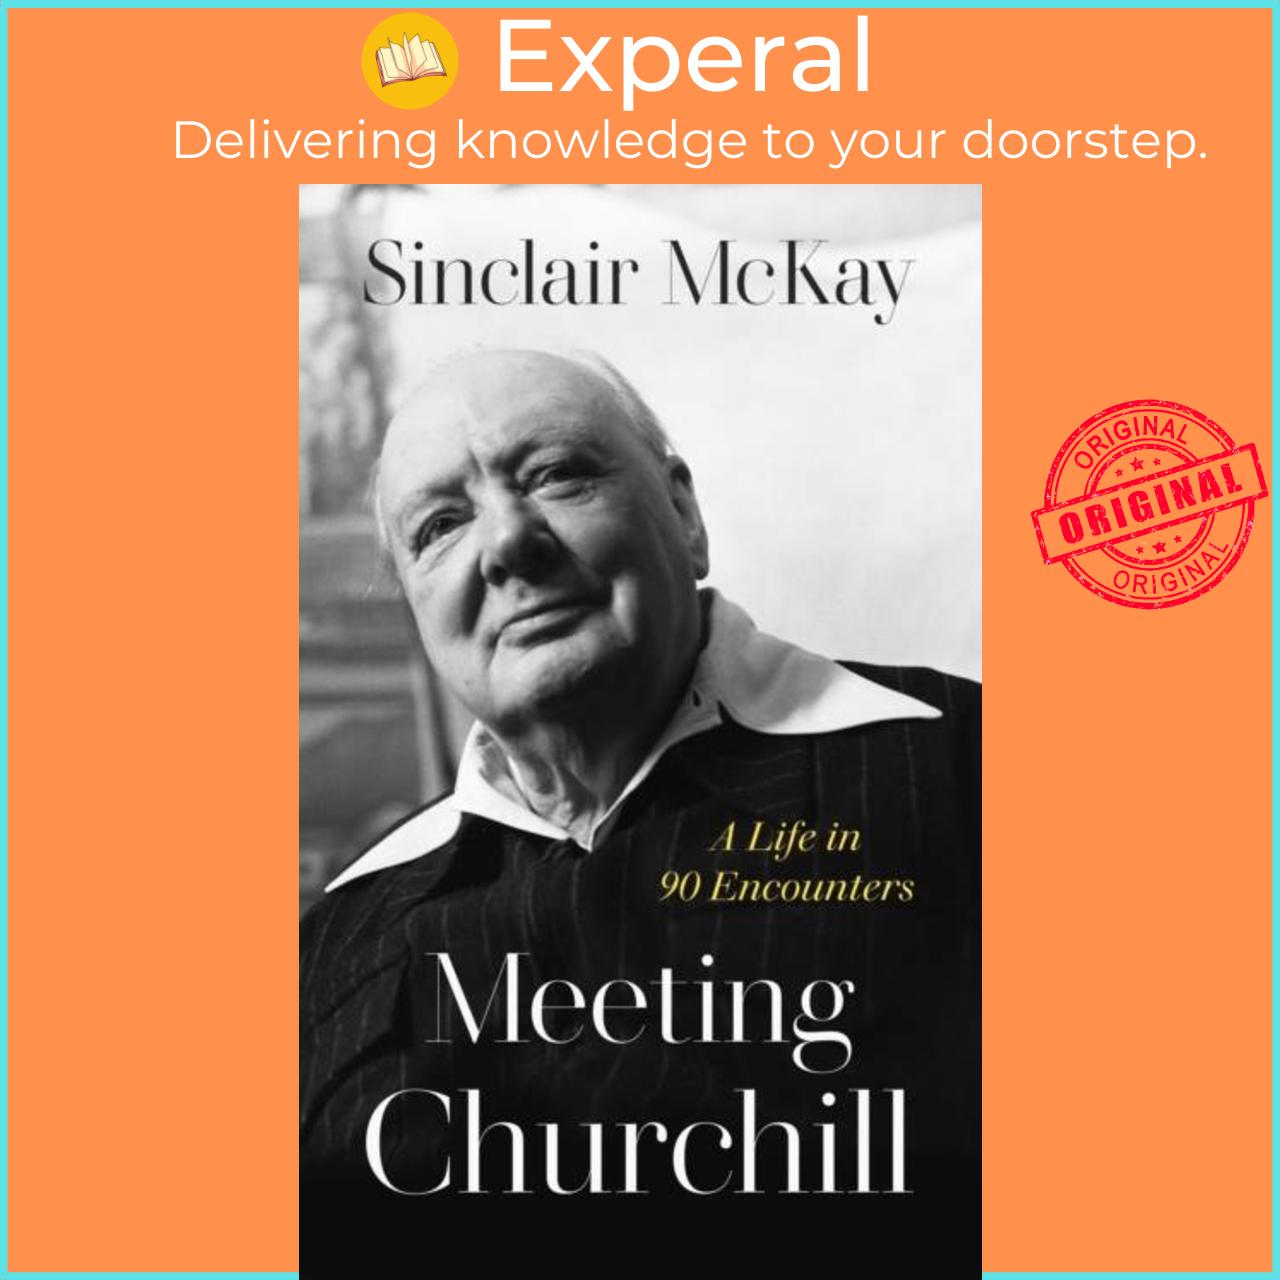 Hình ảnh Sách - Meeting Churchill - A Life in 90 Encounters by Sinclair McKay (UK edition, hardcover)